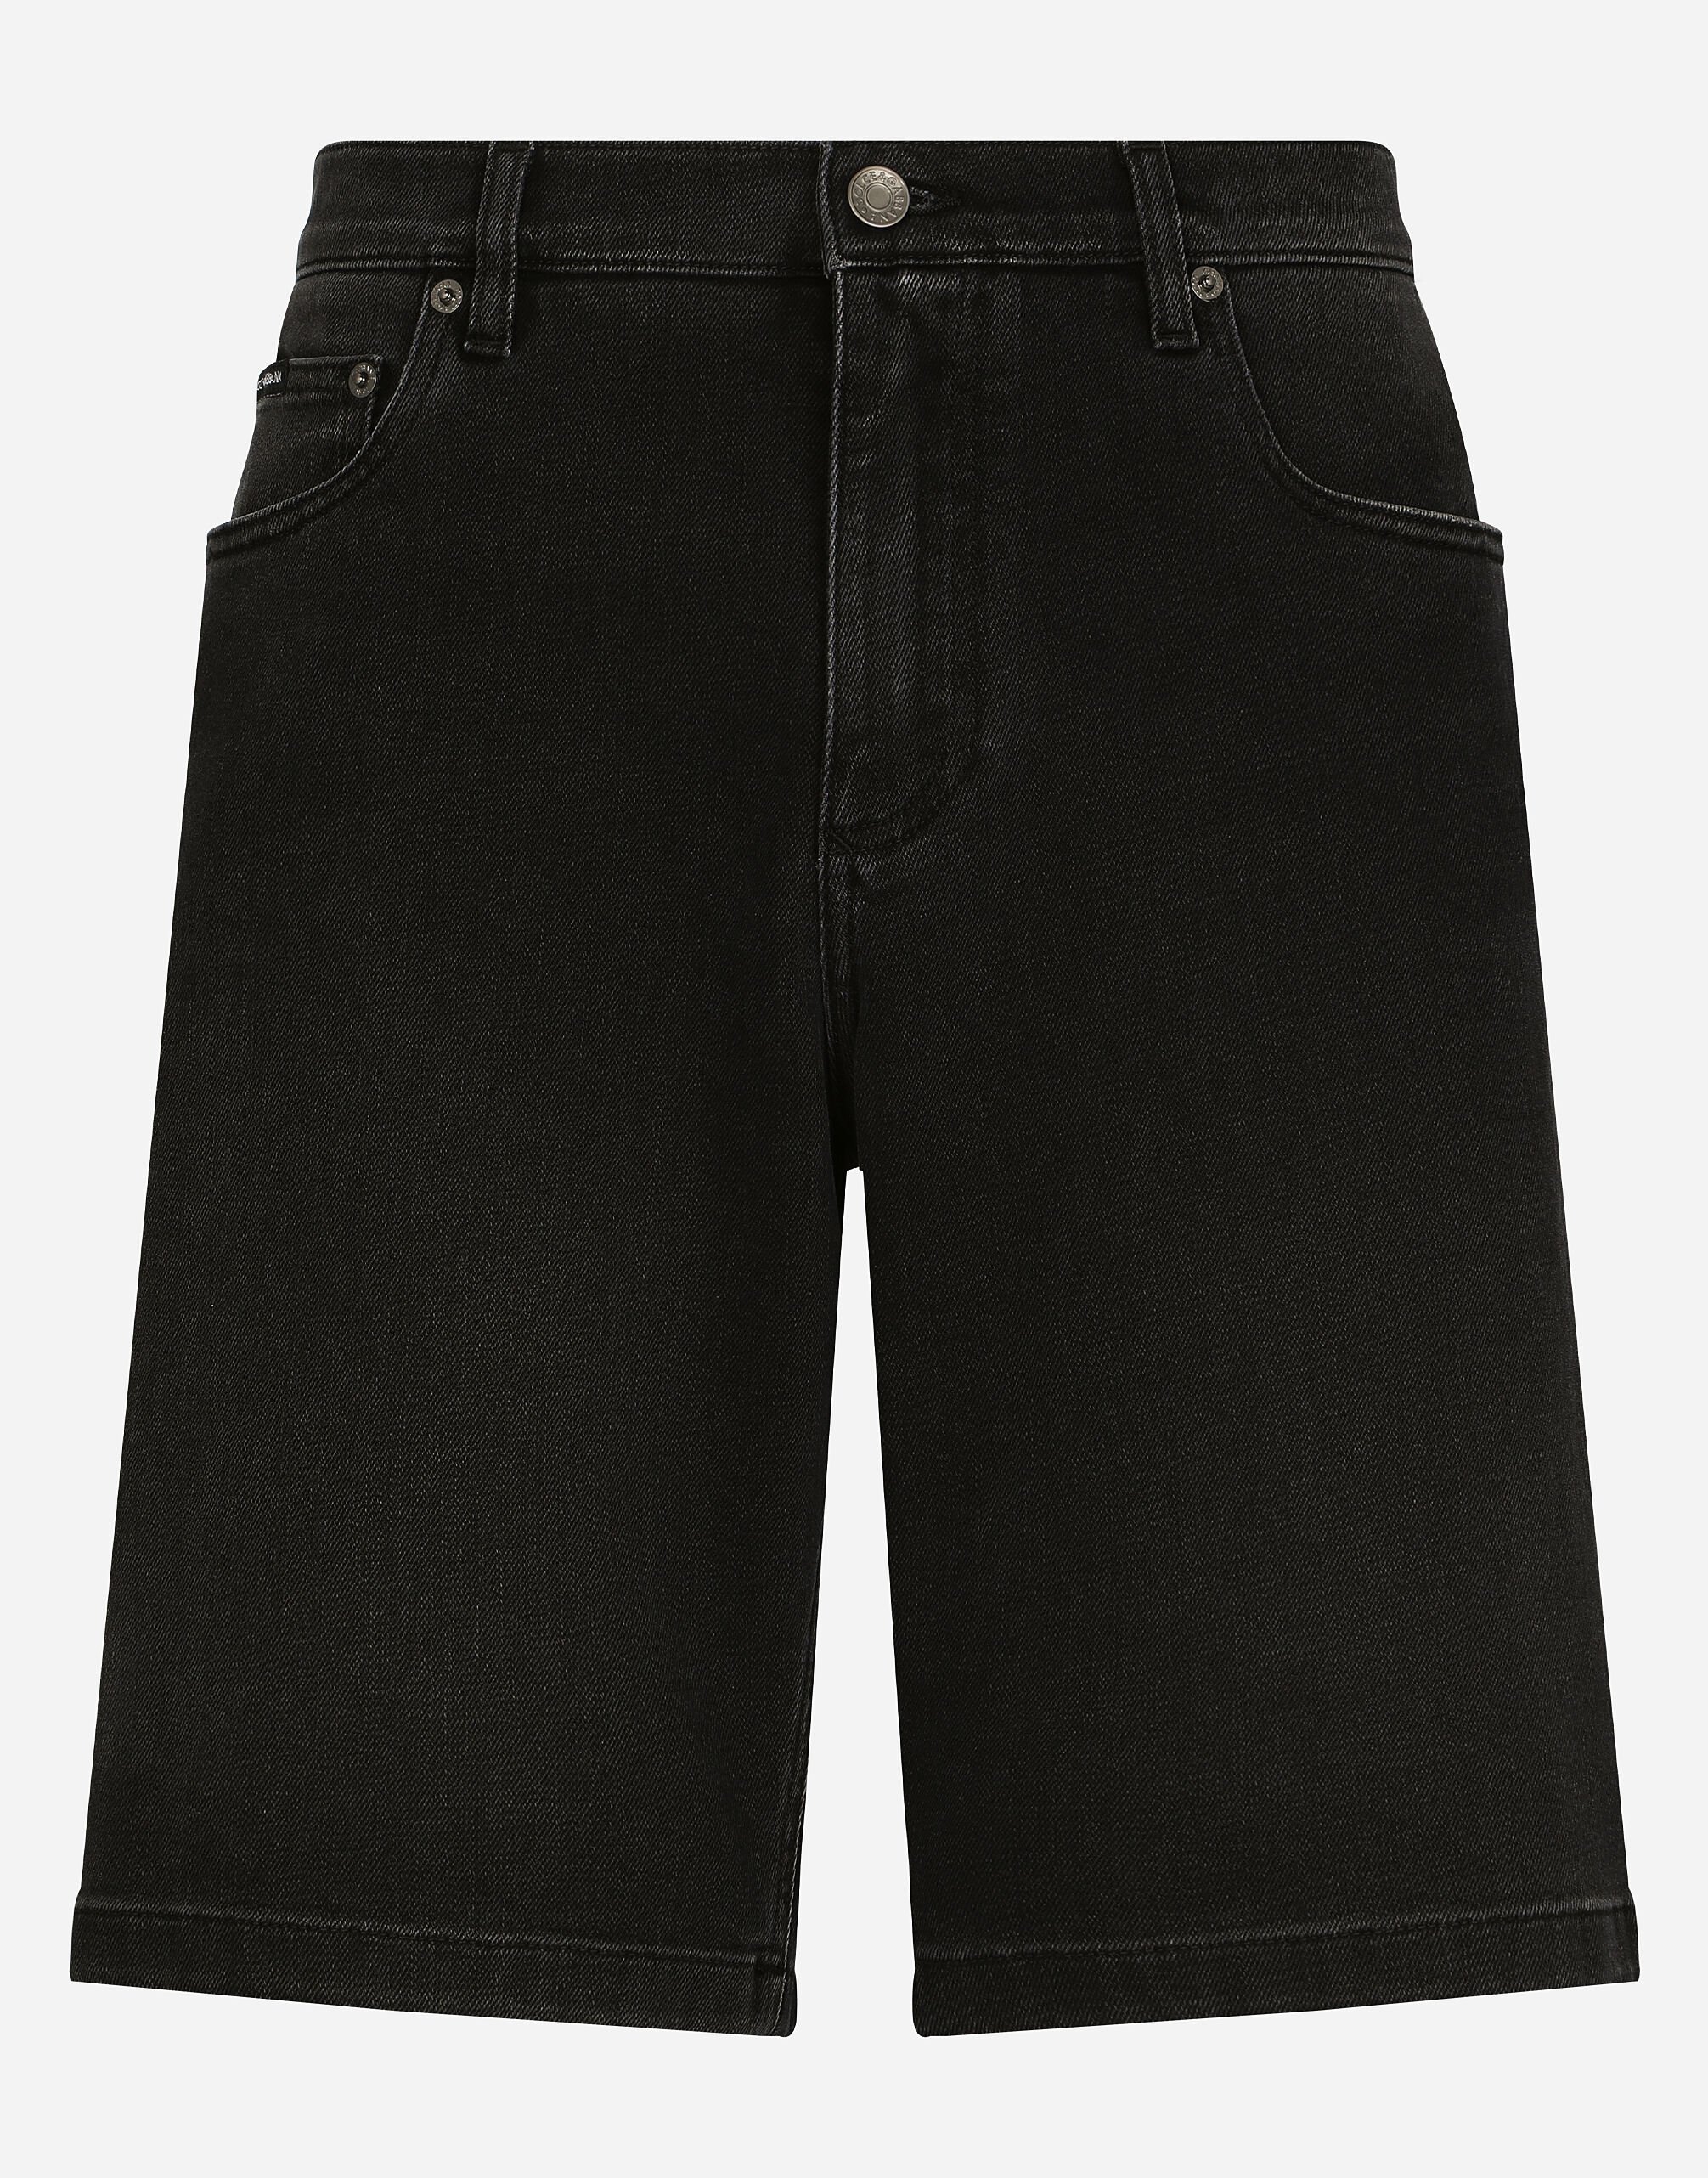 Dolce & Gabbana Jeans-Bermudas Stretch grau gewaschen Mehrfarbig G9NL5DG8GW9